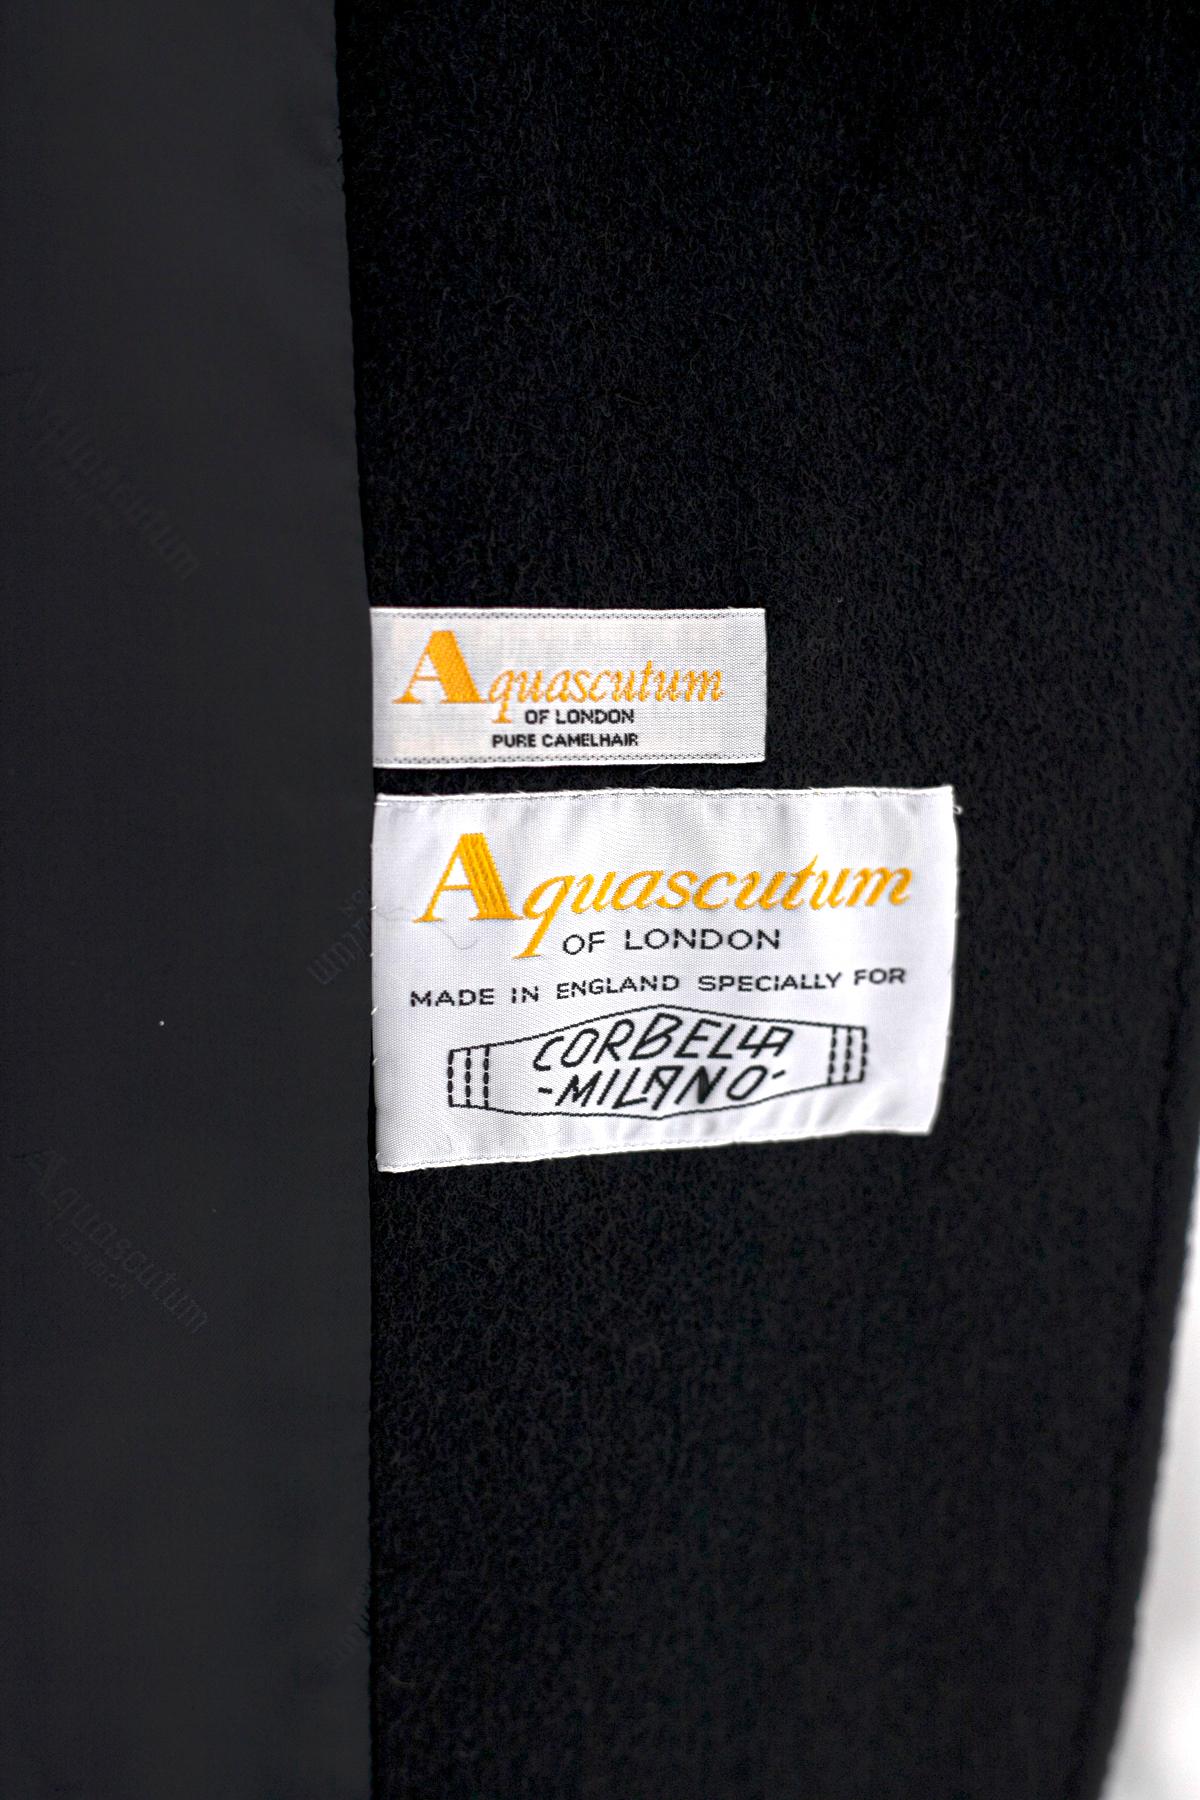 Aquascutum Women's Coat 1990s Black-Colored 1